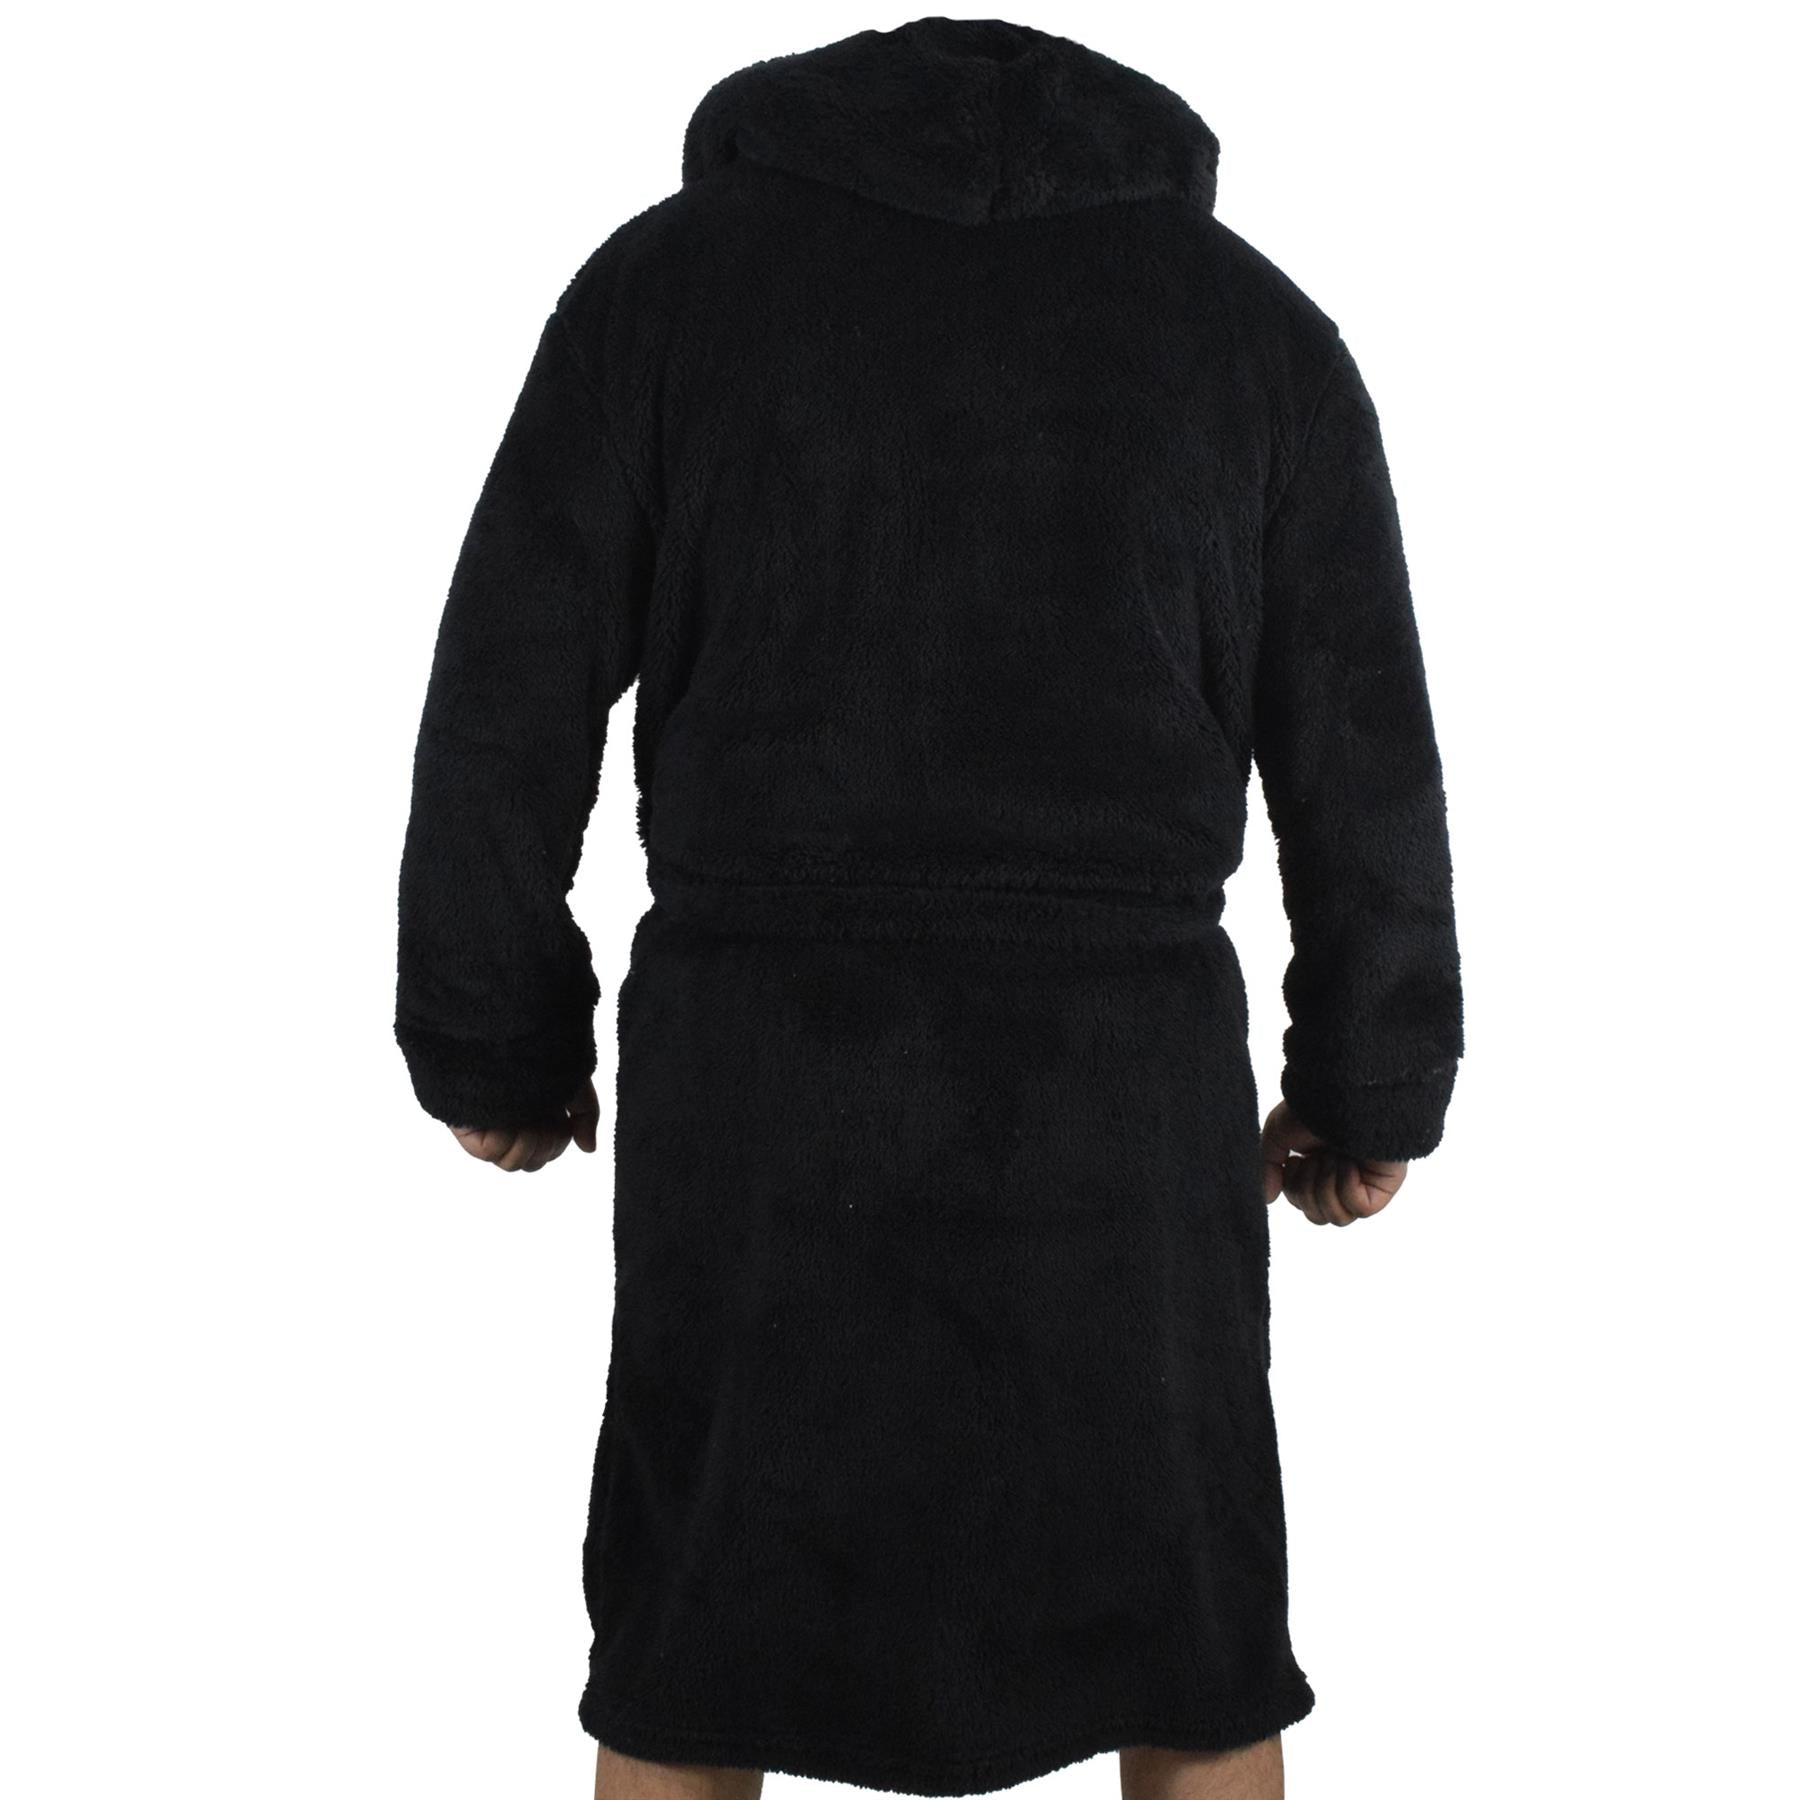 Adults Fleece Black Bathrobe Dressing Gown For Ladies Gents